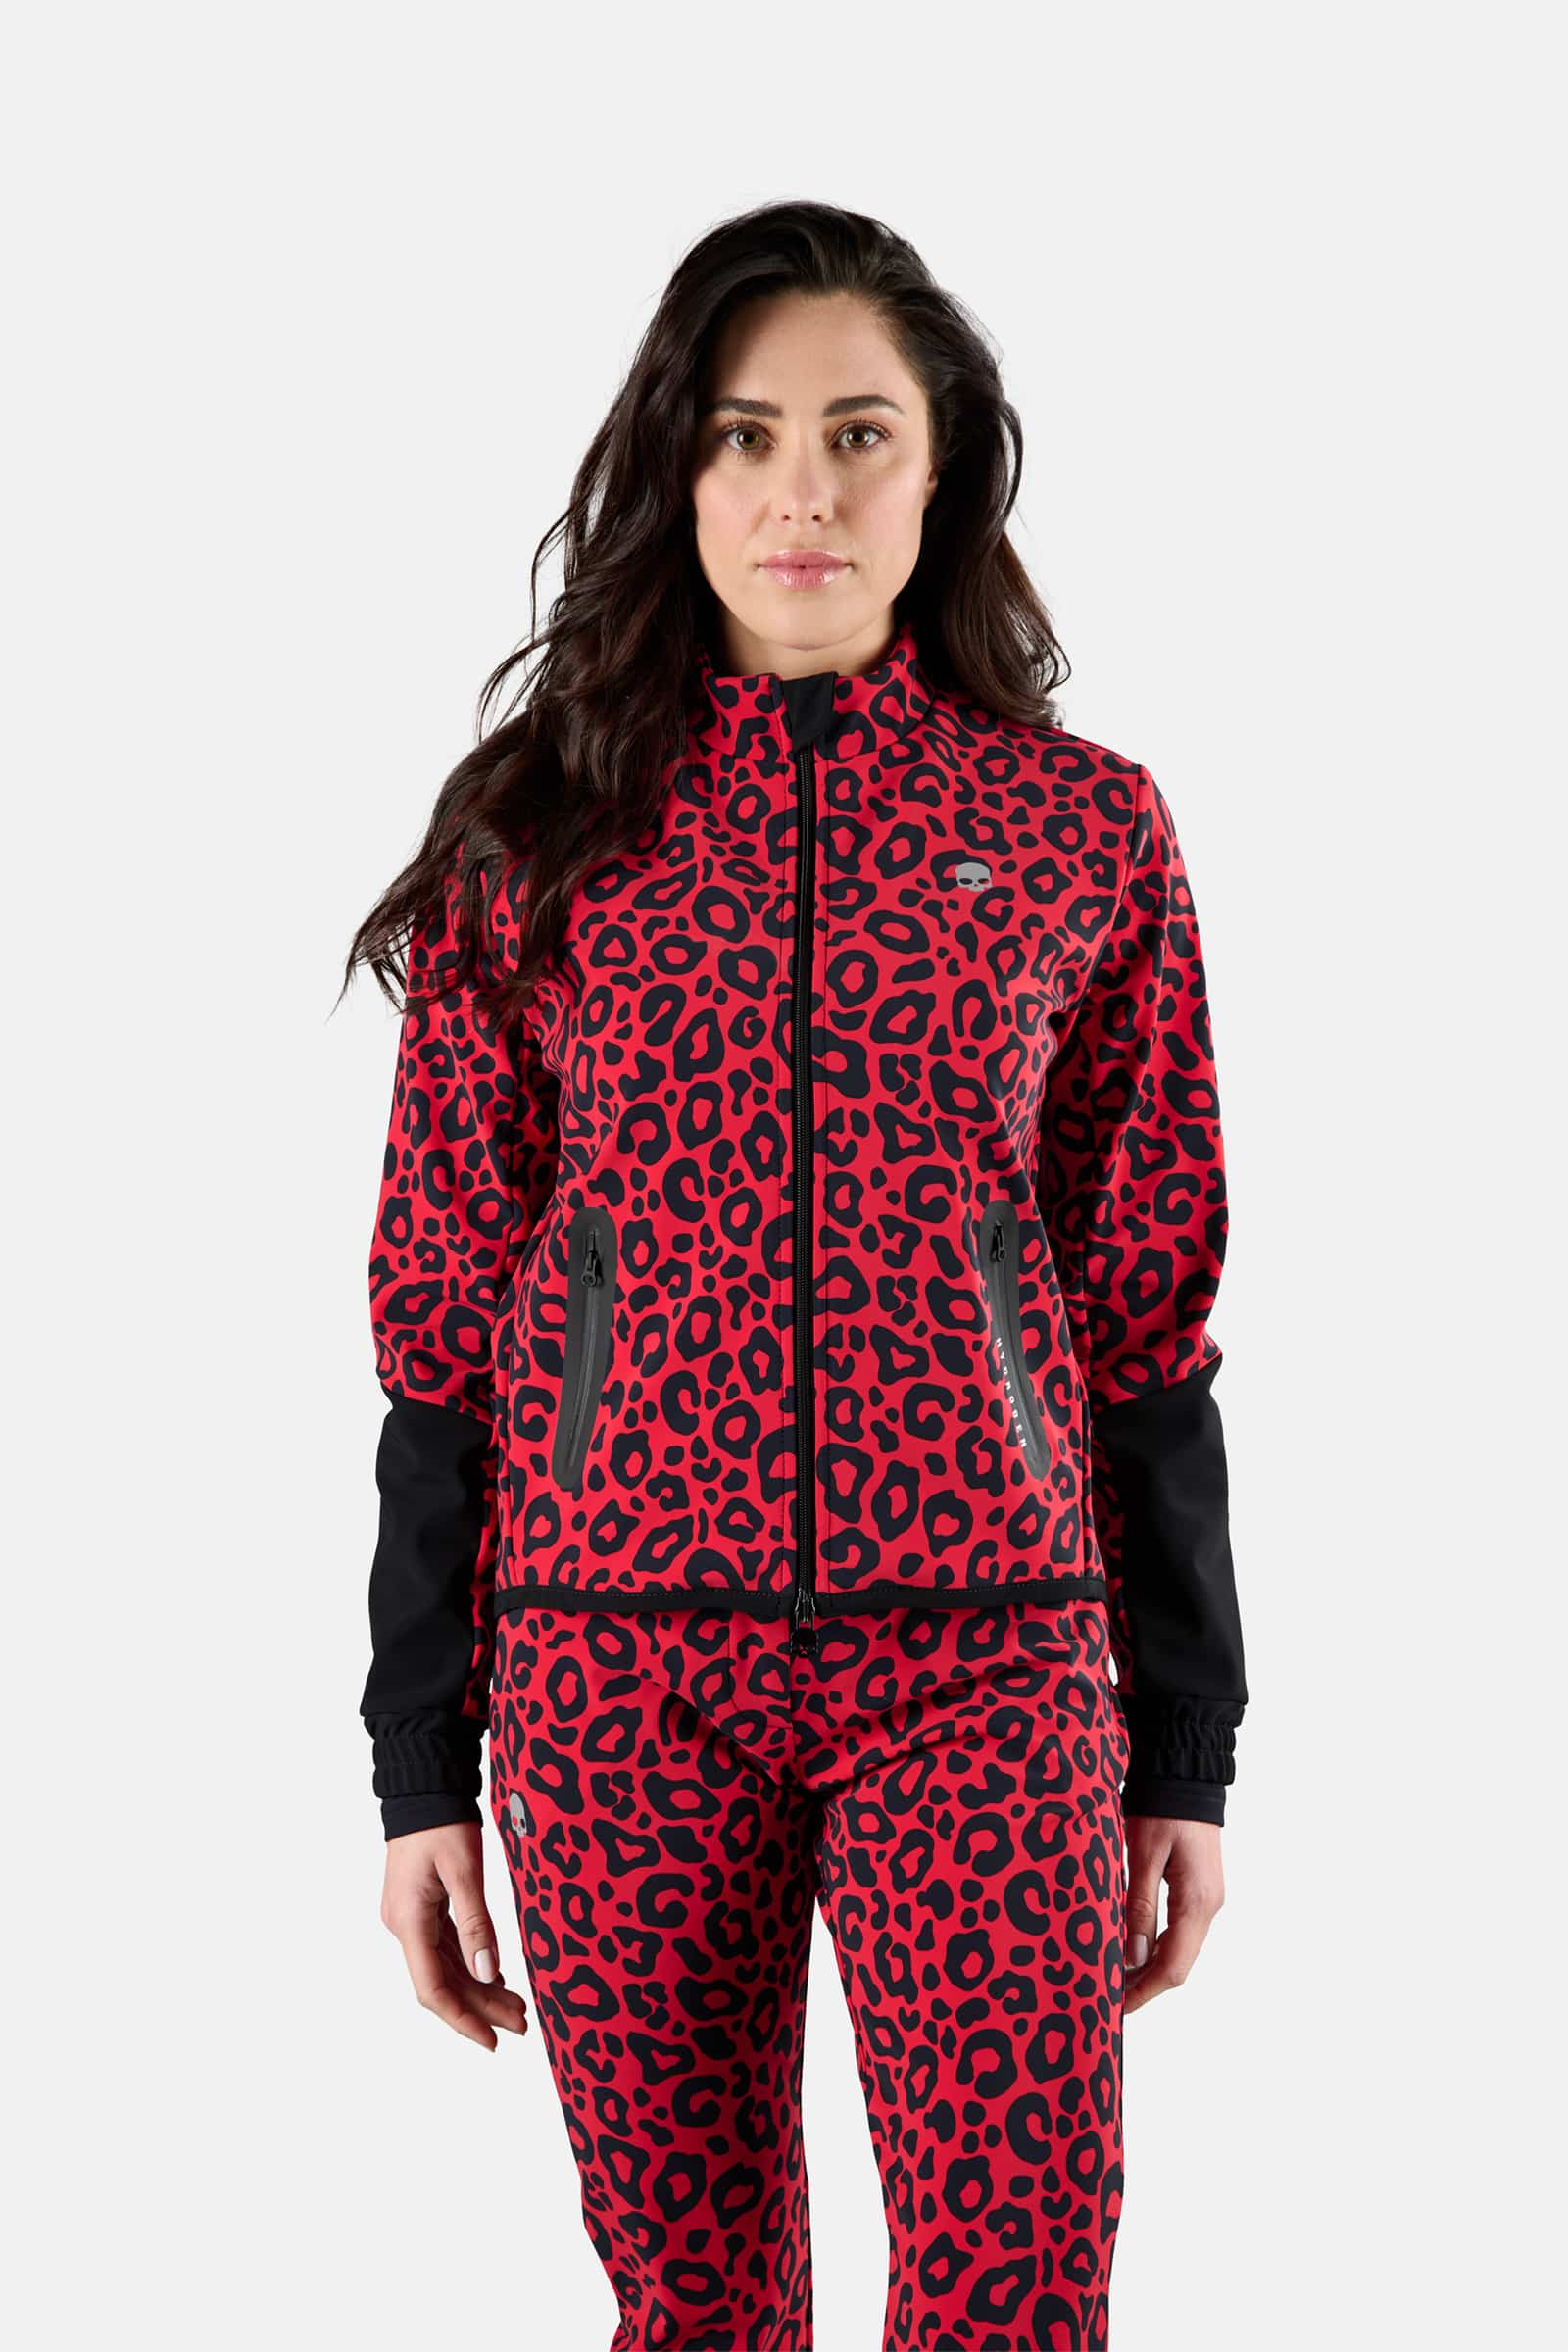 WINTER GOLF JKT - RED PANTHER - Hydrogen - Luxury Sportwear